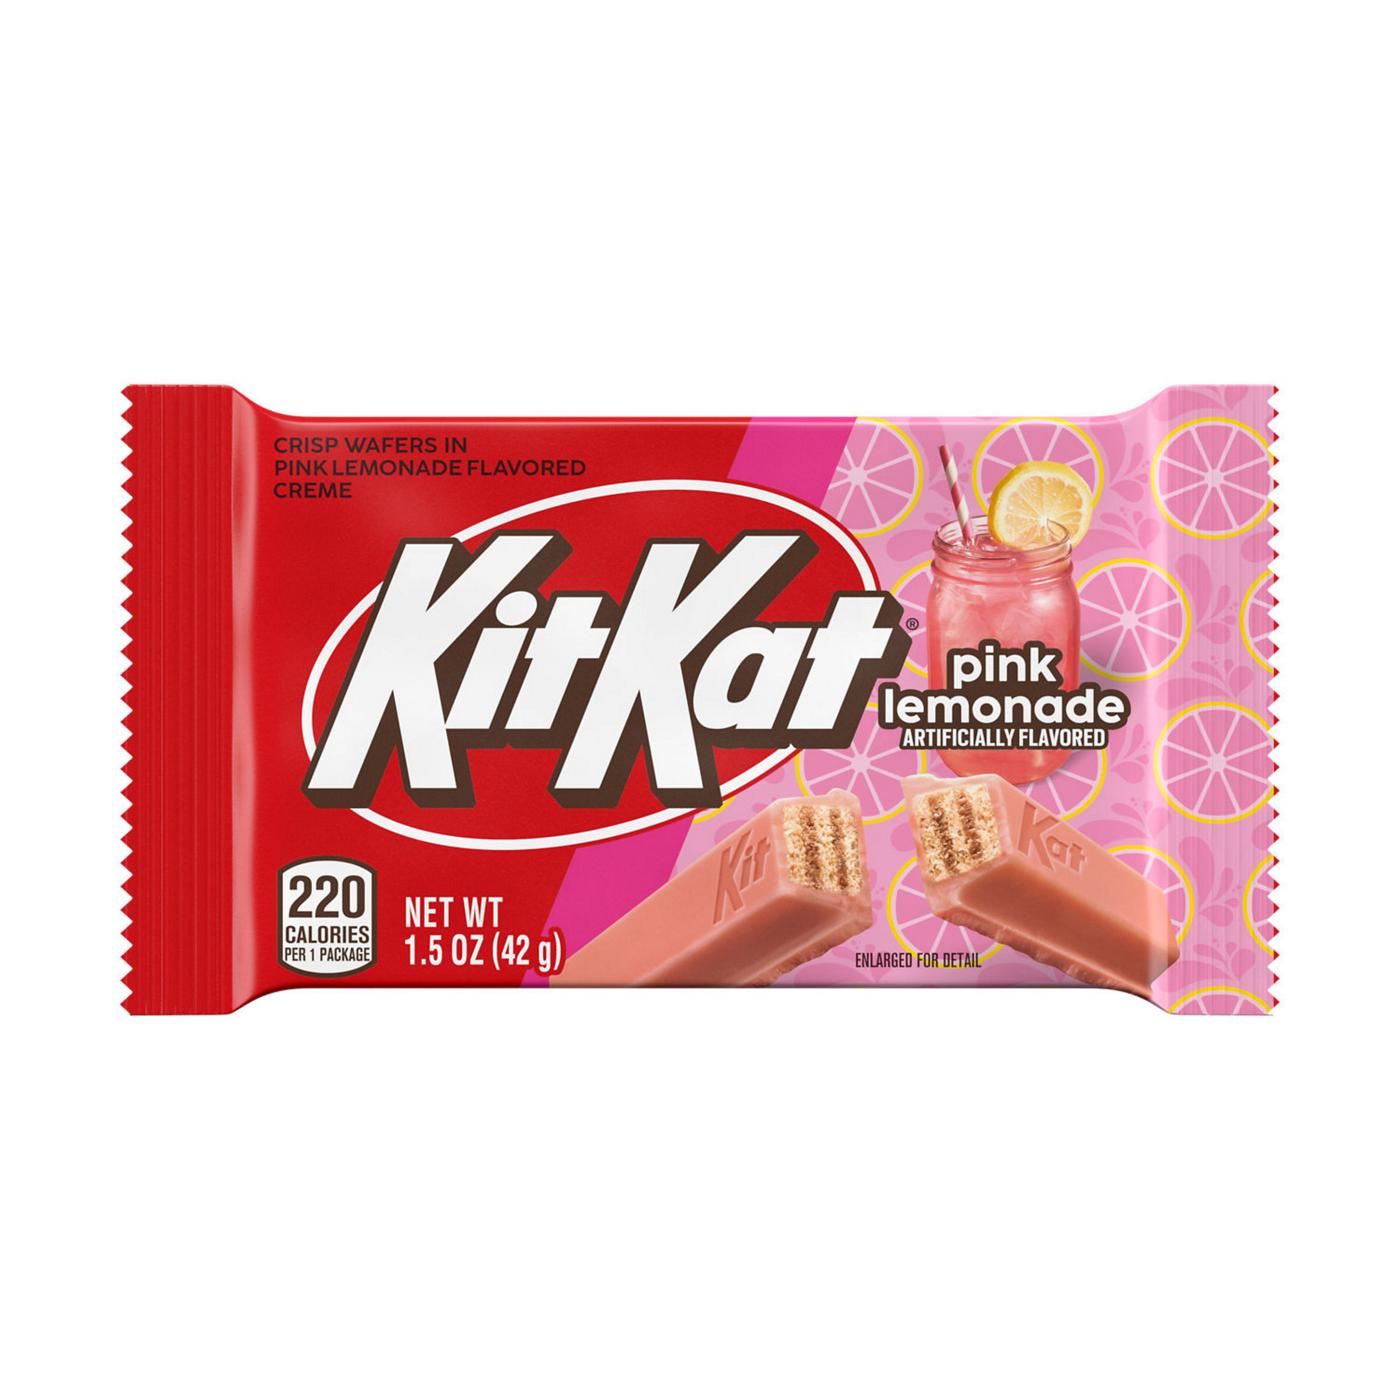 Kit Kat Pink Lemonade Wafer Candy; image 1 of 3